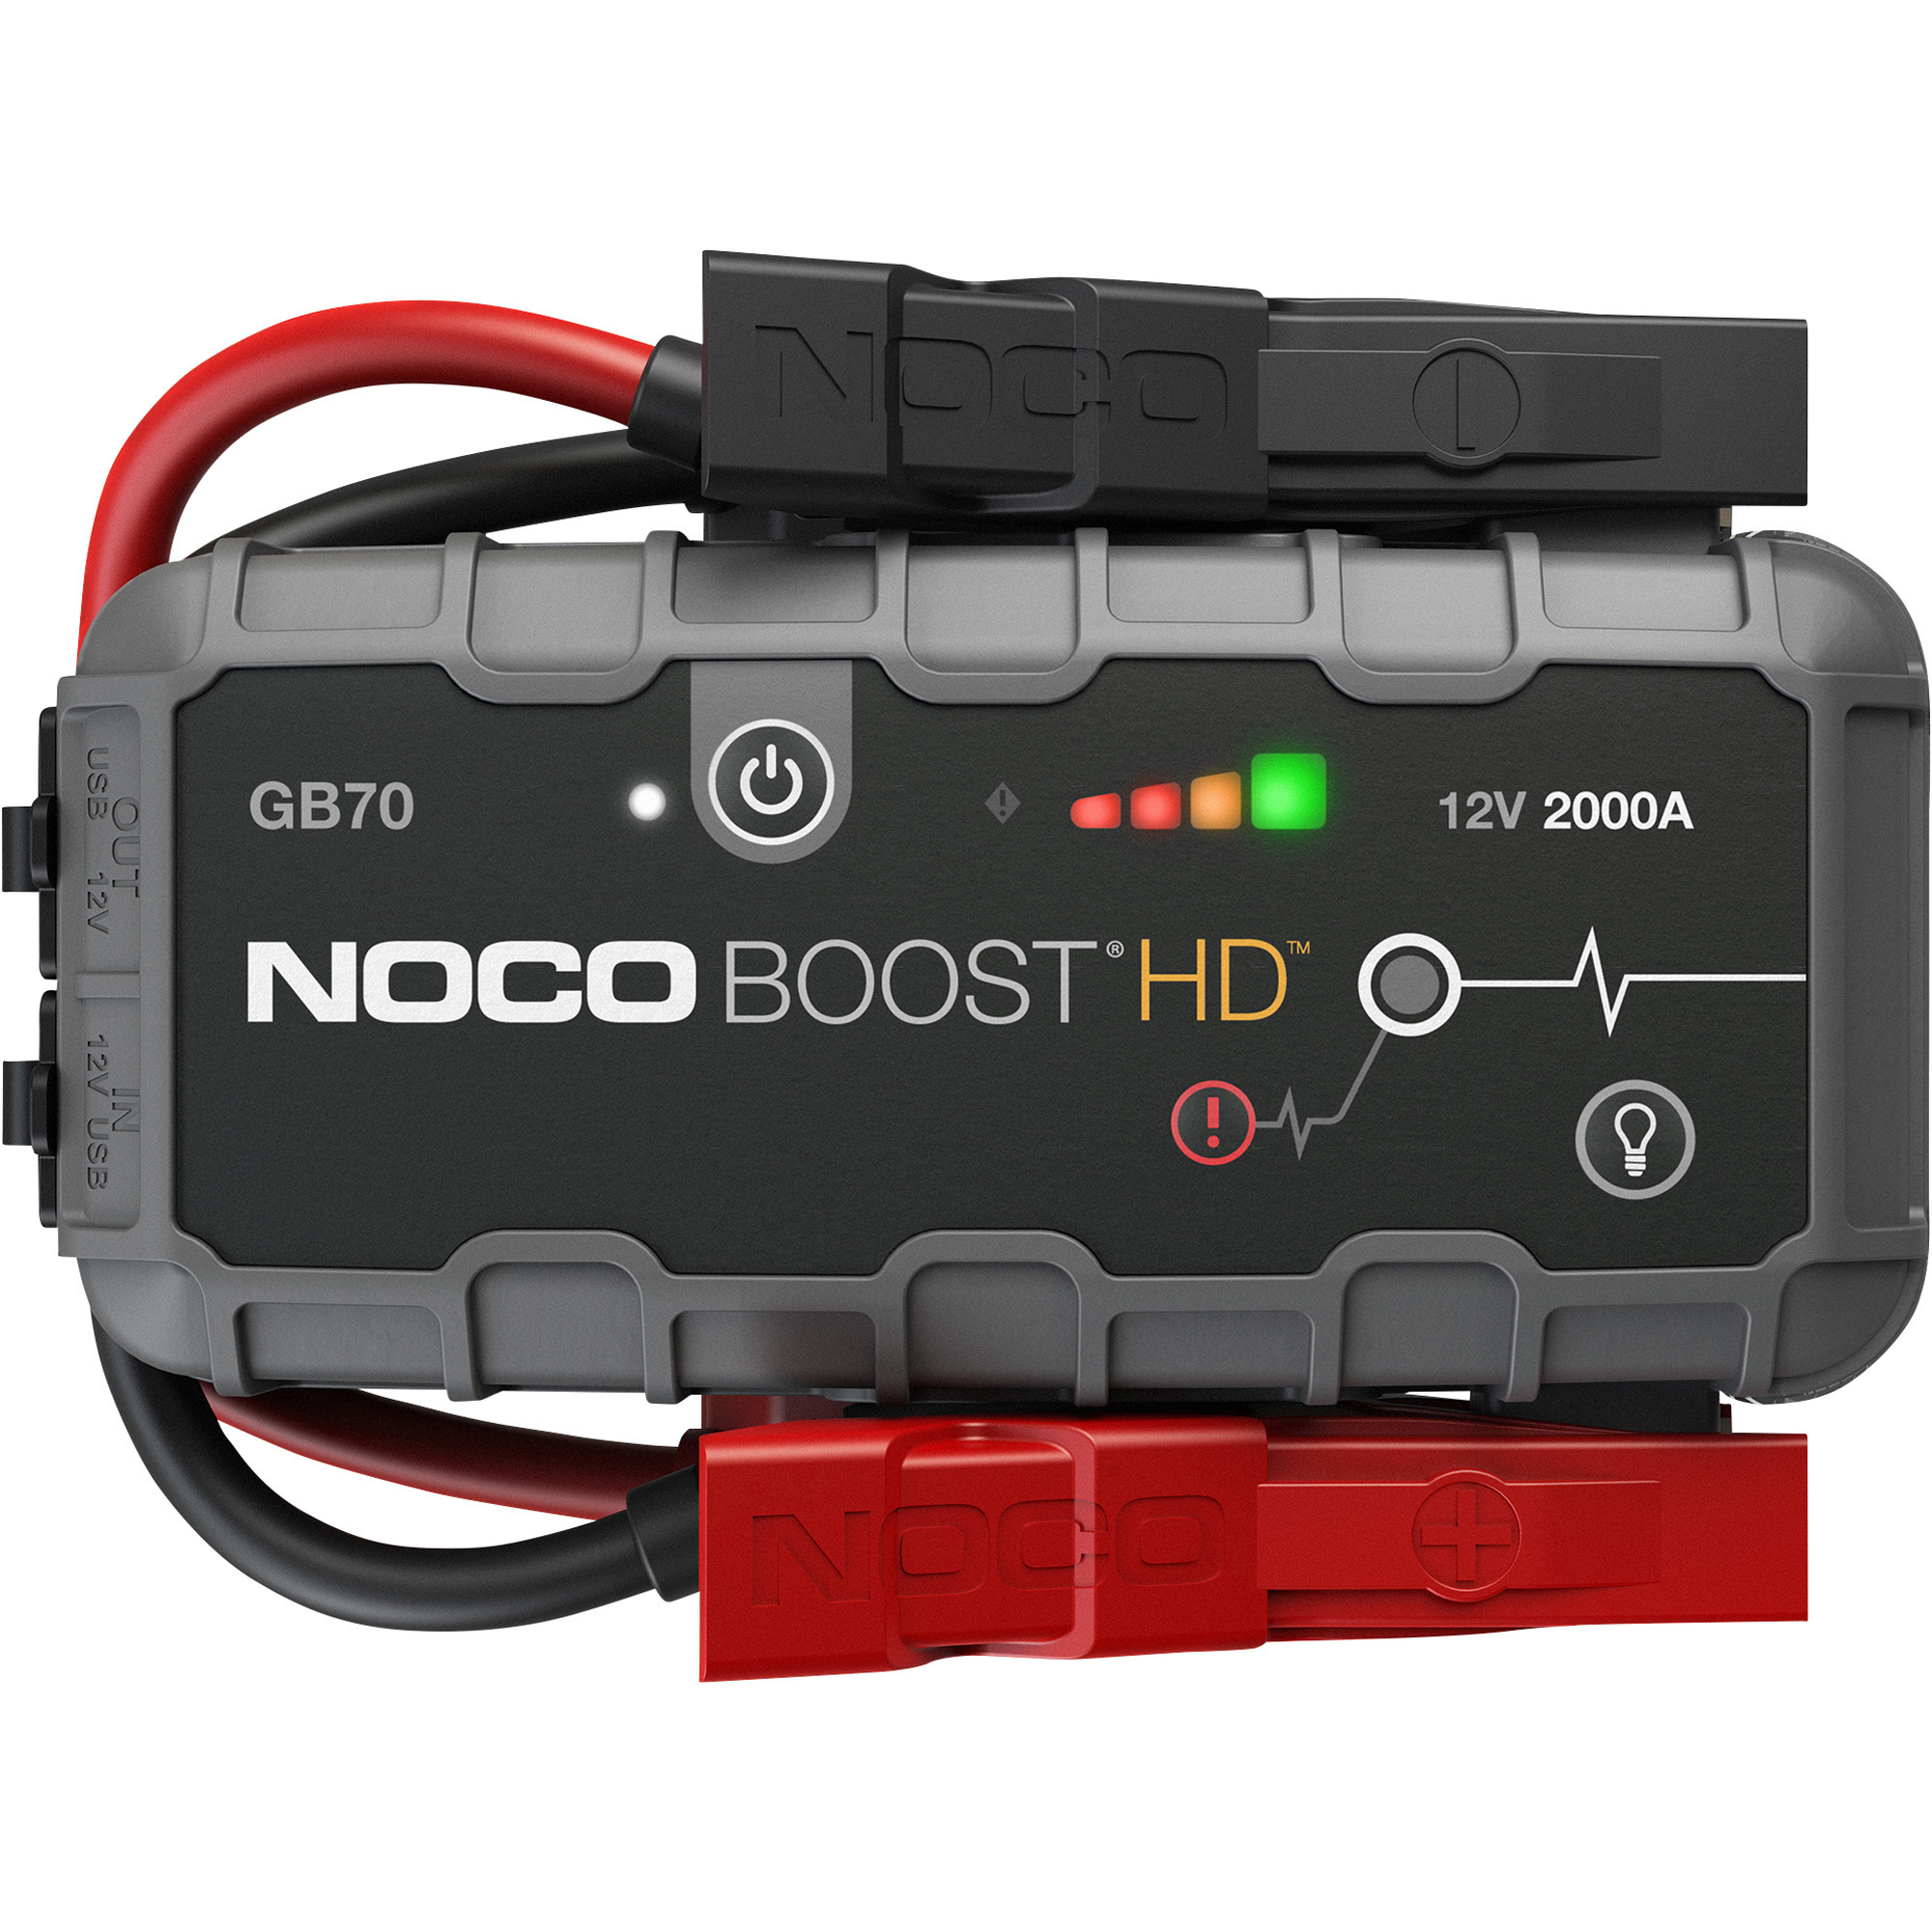 Noco Genius BoostHD Heavy-Duty Compact Lithium-Ion Jump Starter â 2000 Amps, Model GB70